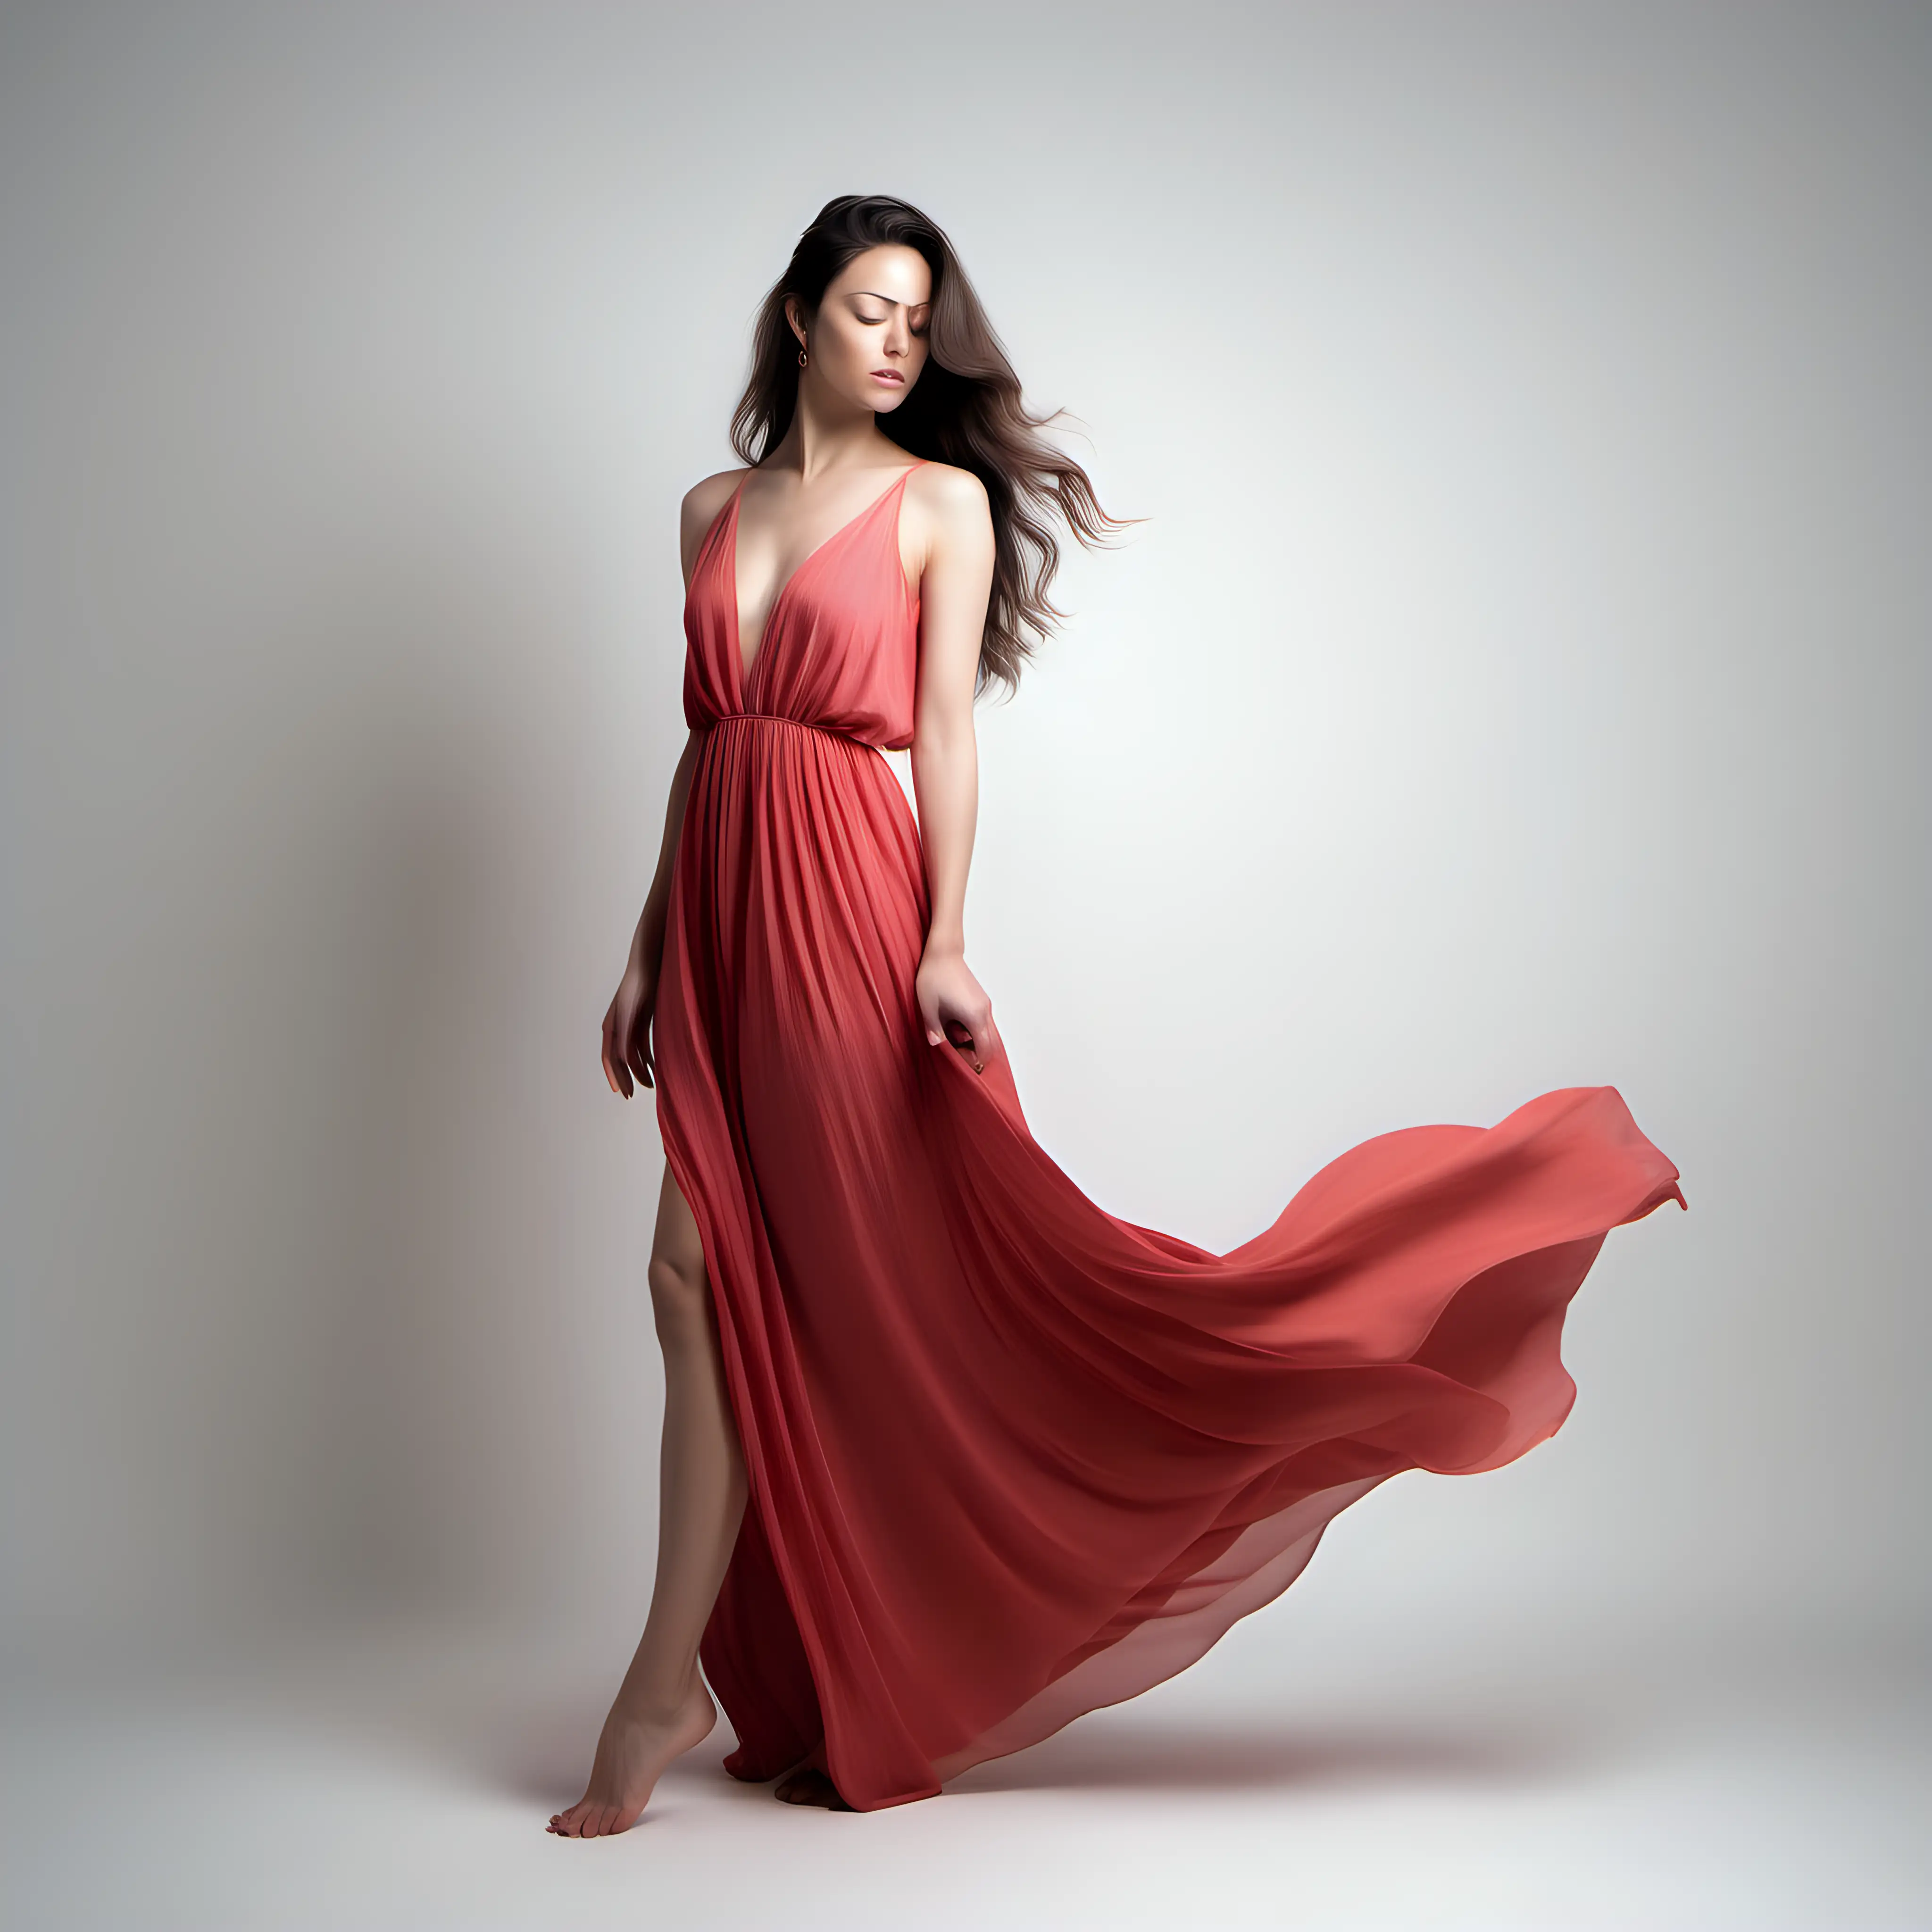 Elegant Model in Flowing Pastel Red Dress Graceful Pose on White Background